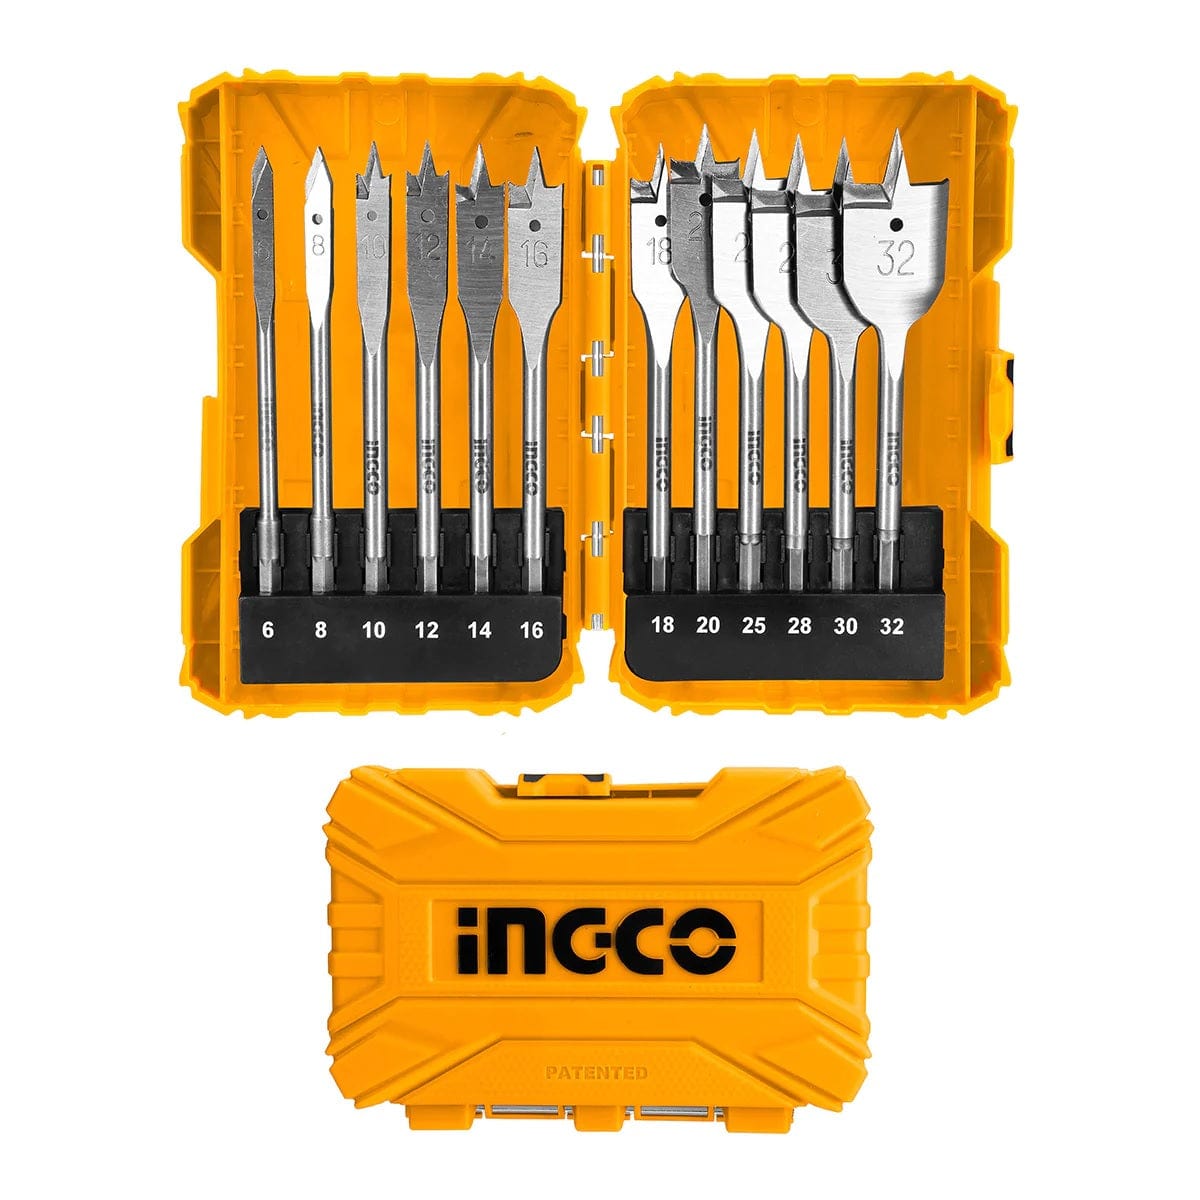 Ingco Wood Twist Drill Bit | Supply Master | Accra, Ghana Drill Bits Buy Tools hardware Building materials